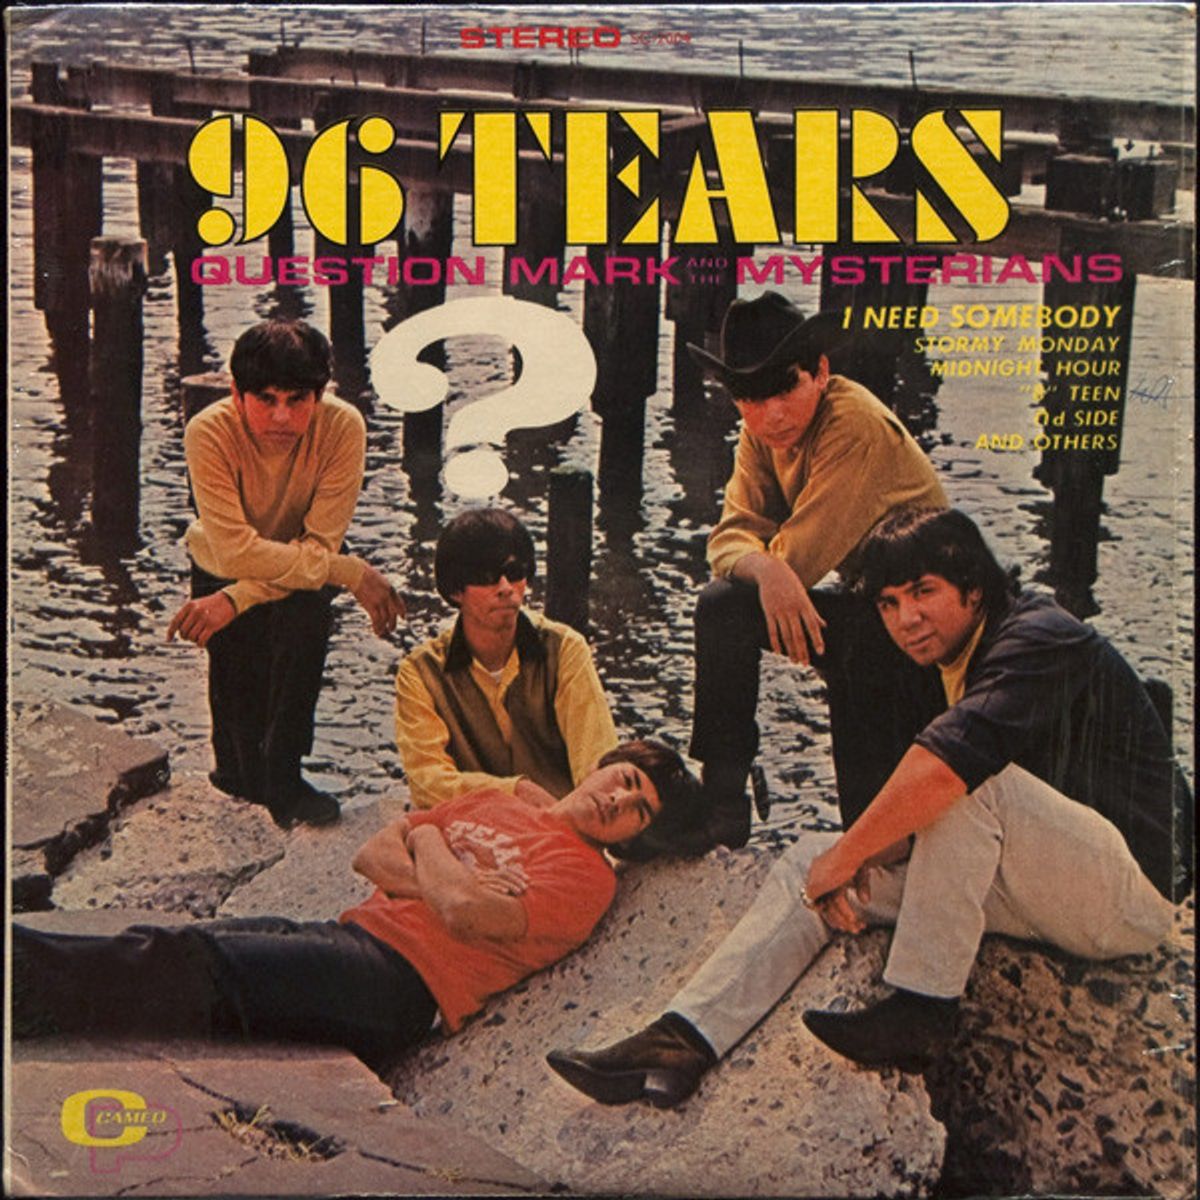 #Tranen - Question Mark & the Mysterians - 96 Tears (1966)